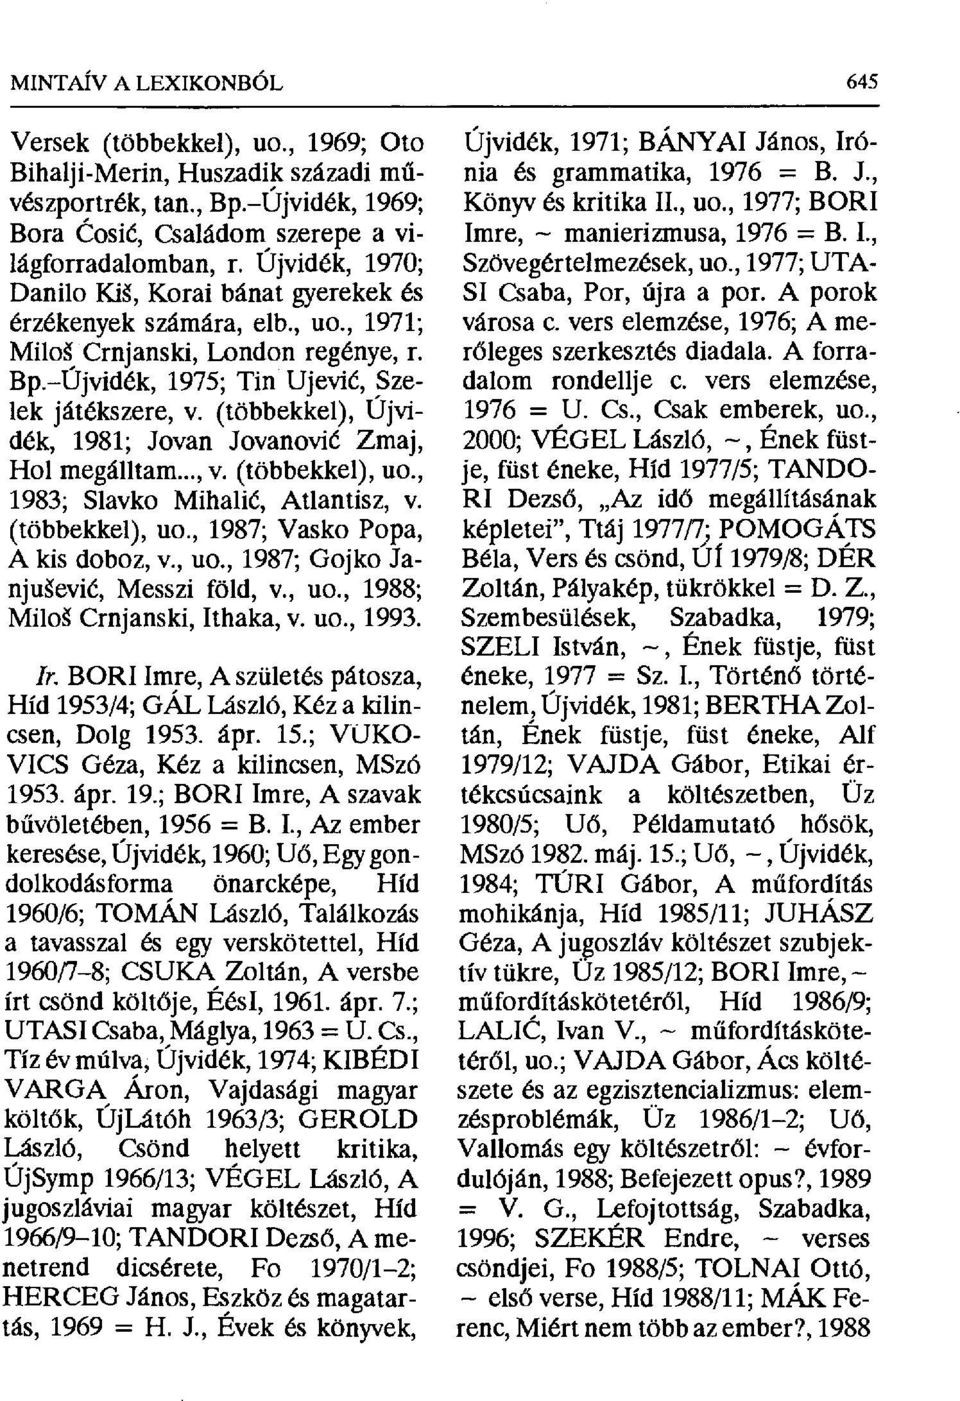 (többekkel), Újvidék, 1981; Jovan Jovanovi ć Zmaj, Hol megálltam..., v. (többekkel), uo., 1983; Slavko Mihali ć, Atlantisz, v. (többekkel), uo., 1987; Vasko Pipa, A kis doboz, v., uo., 1987; Gojko Janjušević, Messzi föld, v.